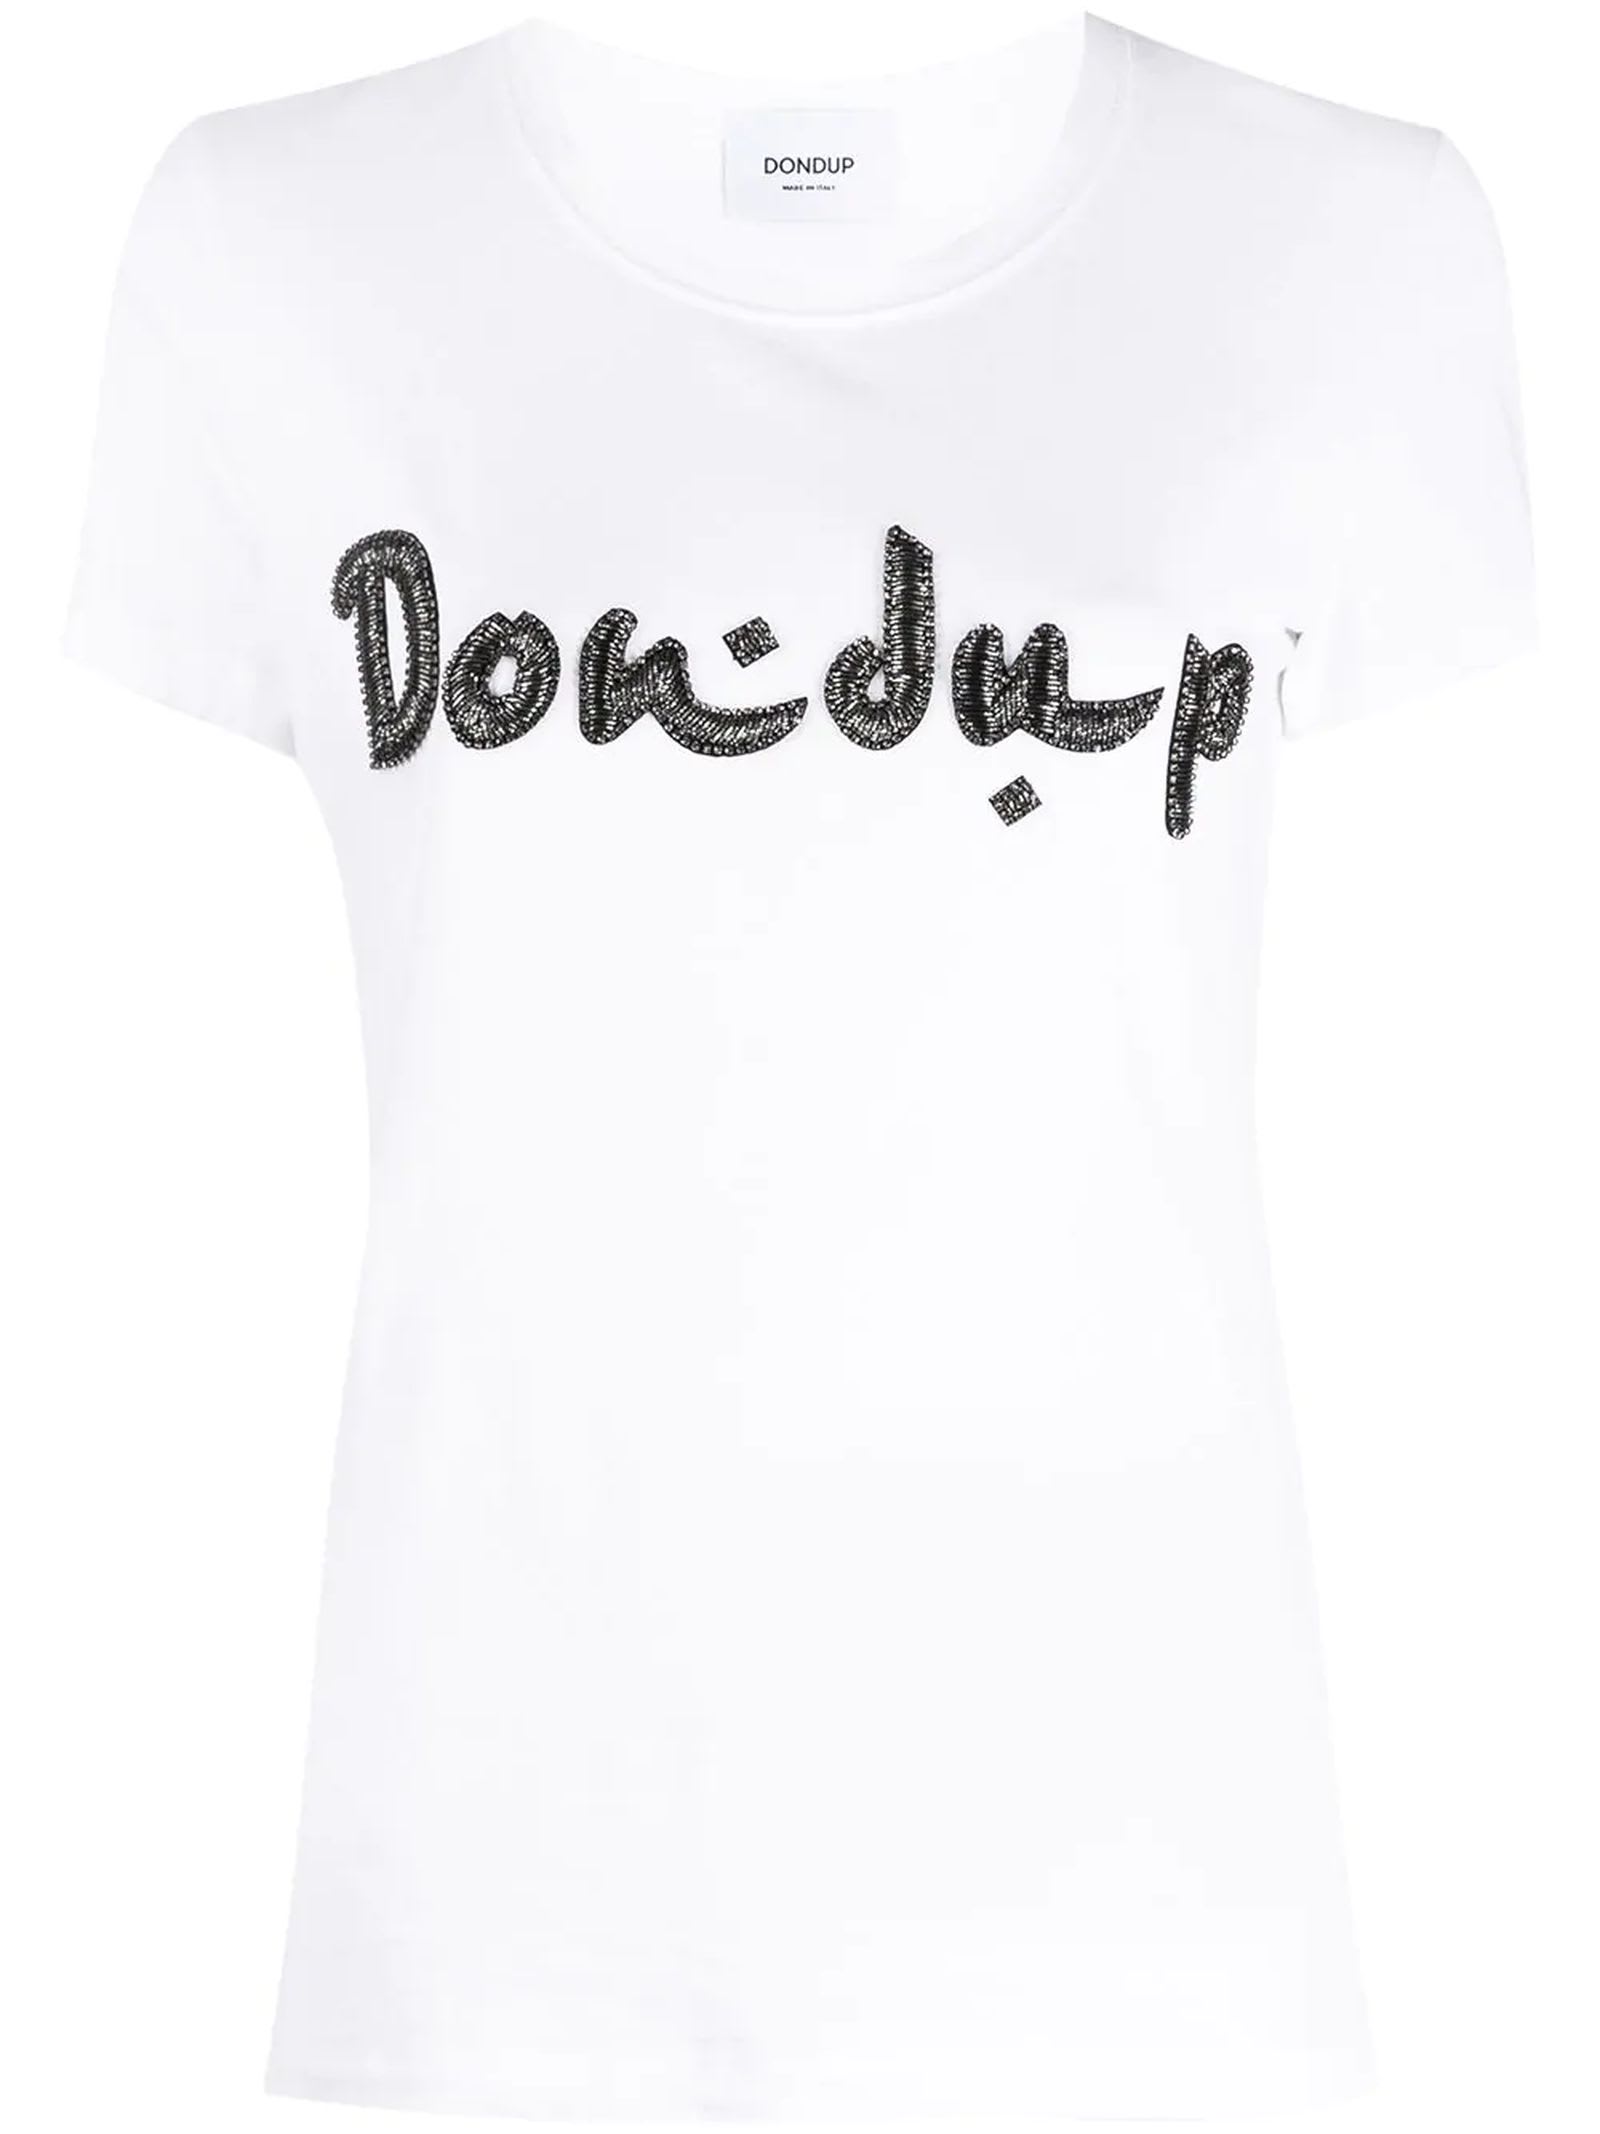 Dondup White Cotton T-shirt